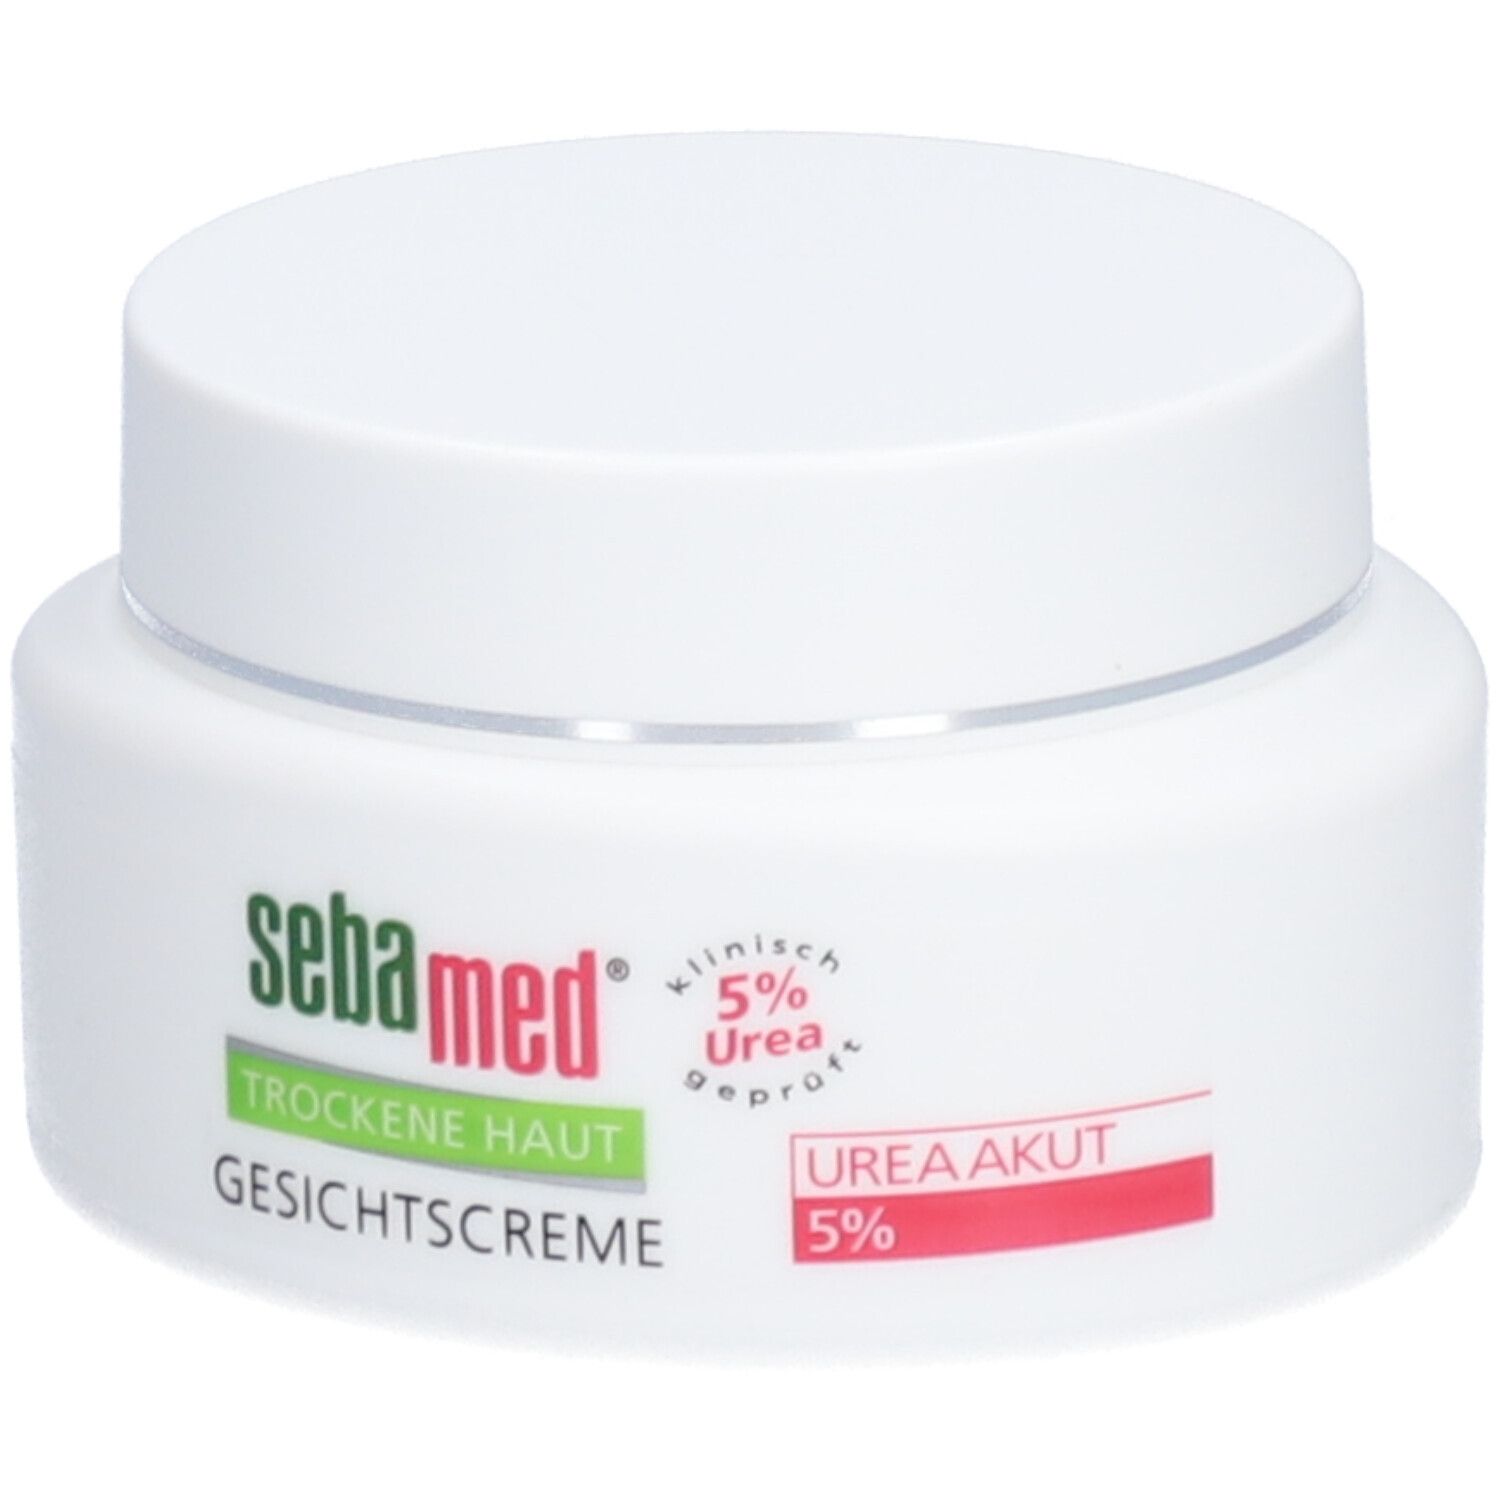 sebamed® Trockene Haut Gesichtscreme Urea Akut 5%